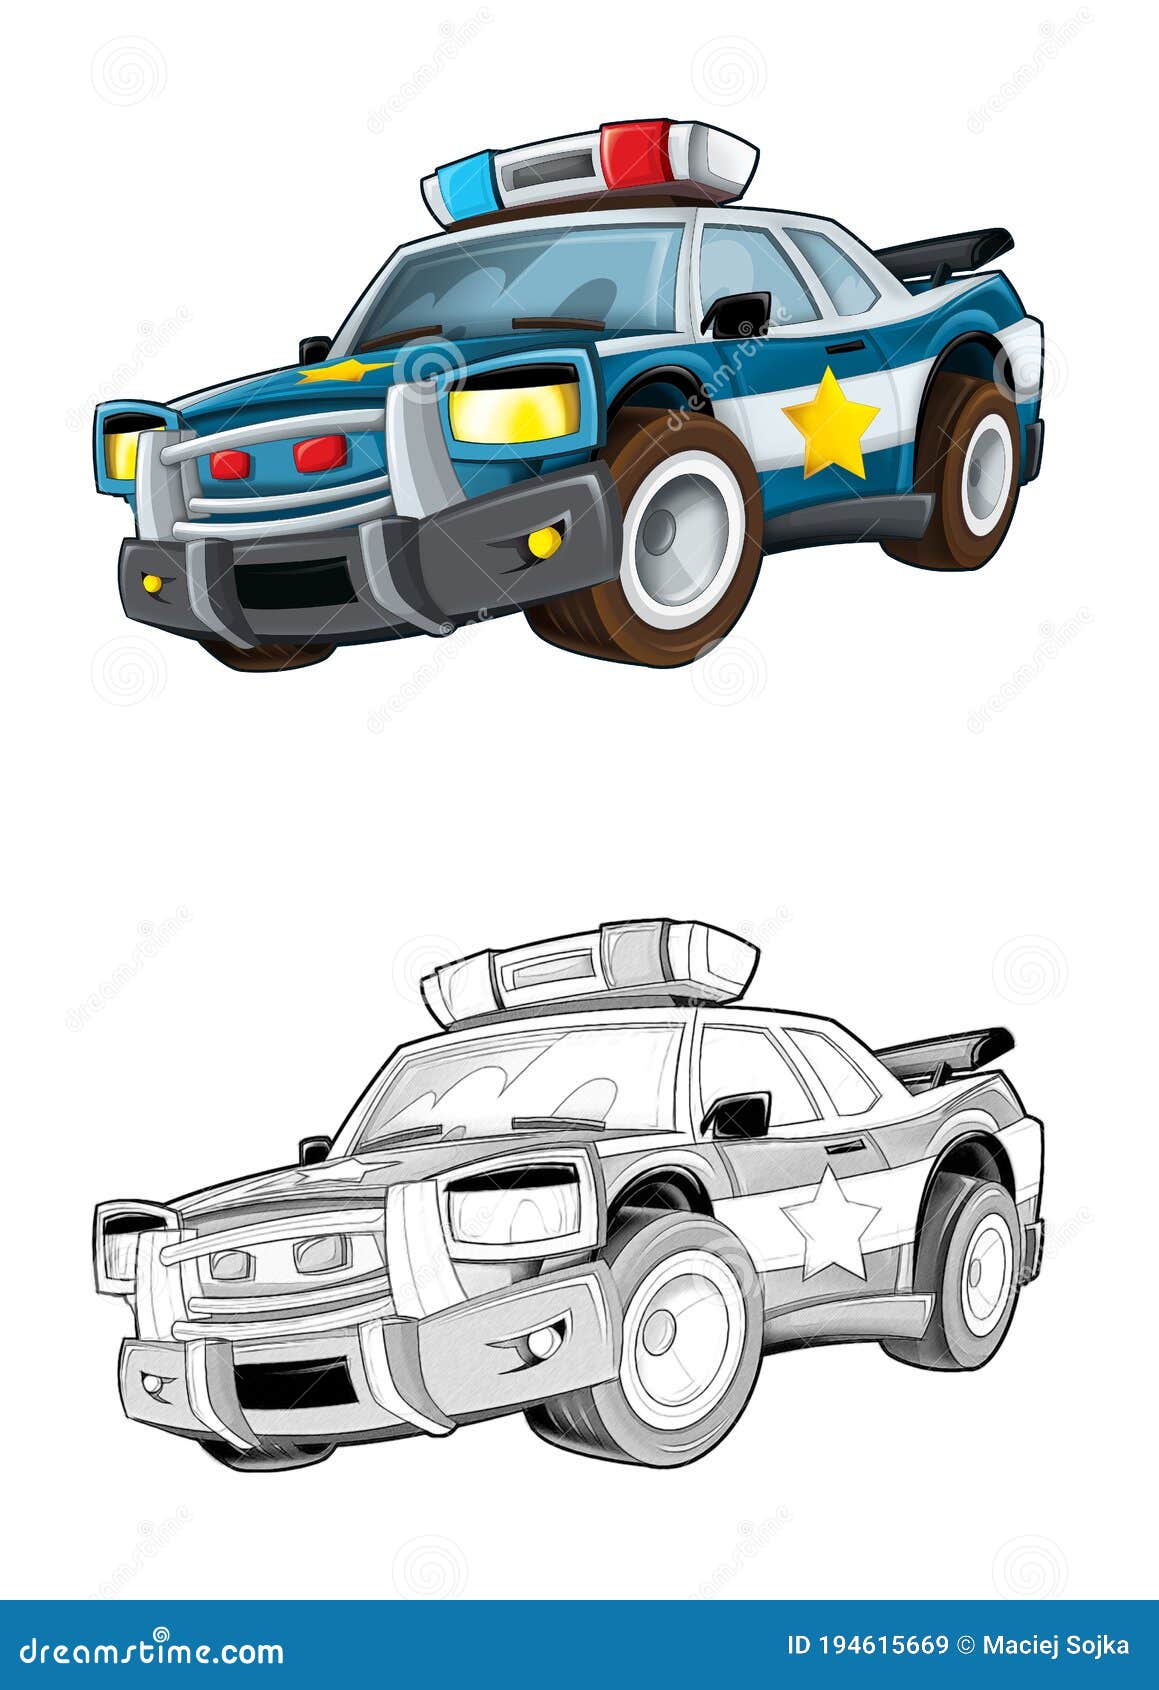 Cartoon Sketch Police Motorbike - on White Background Illustration ...